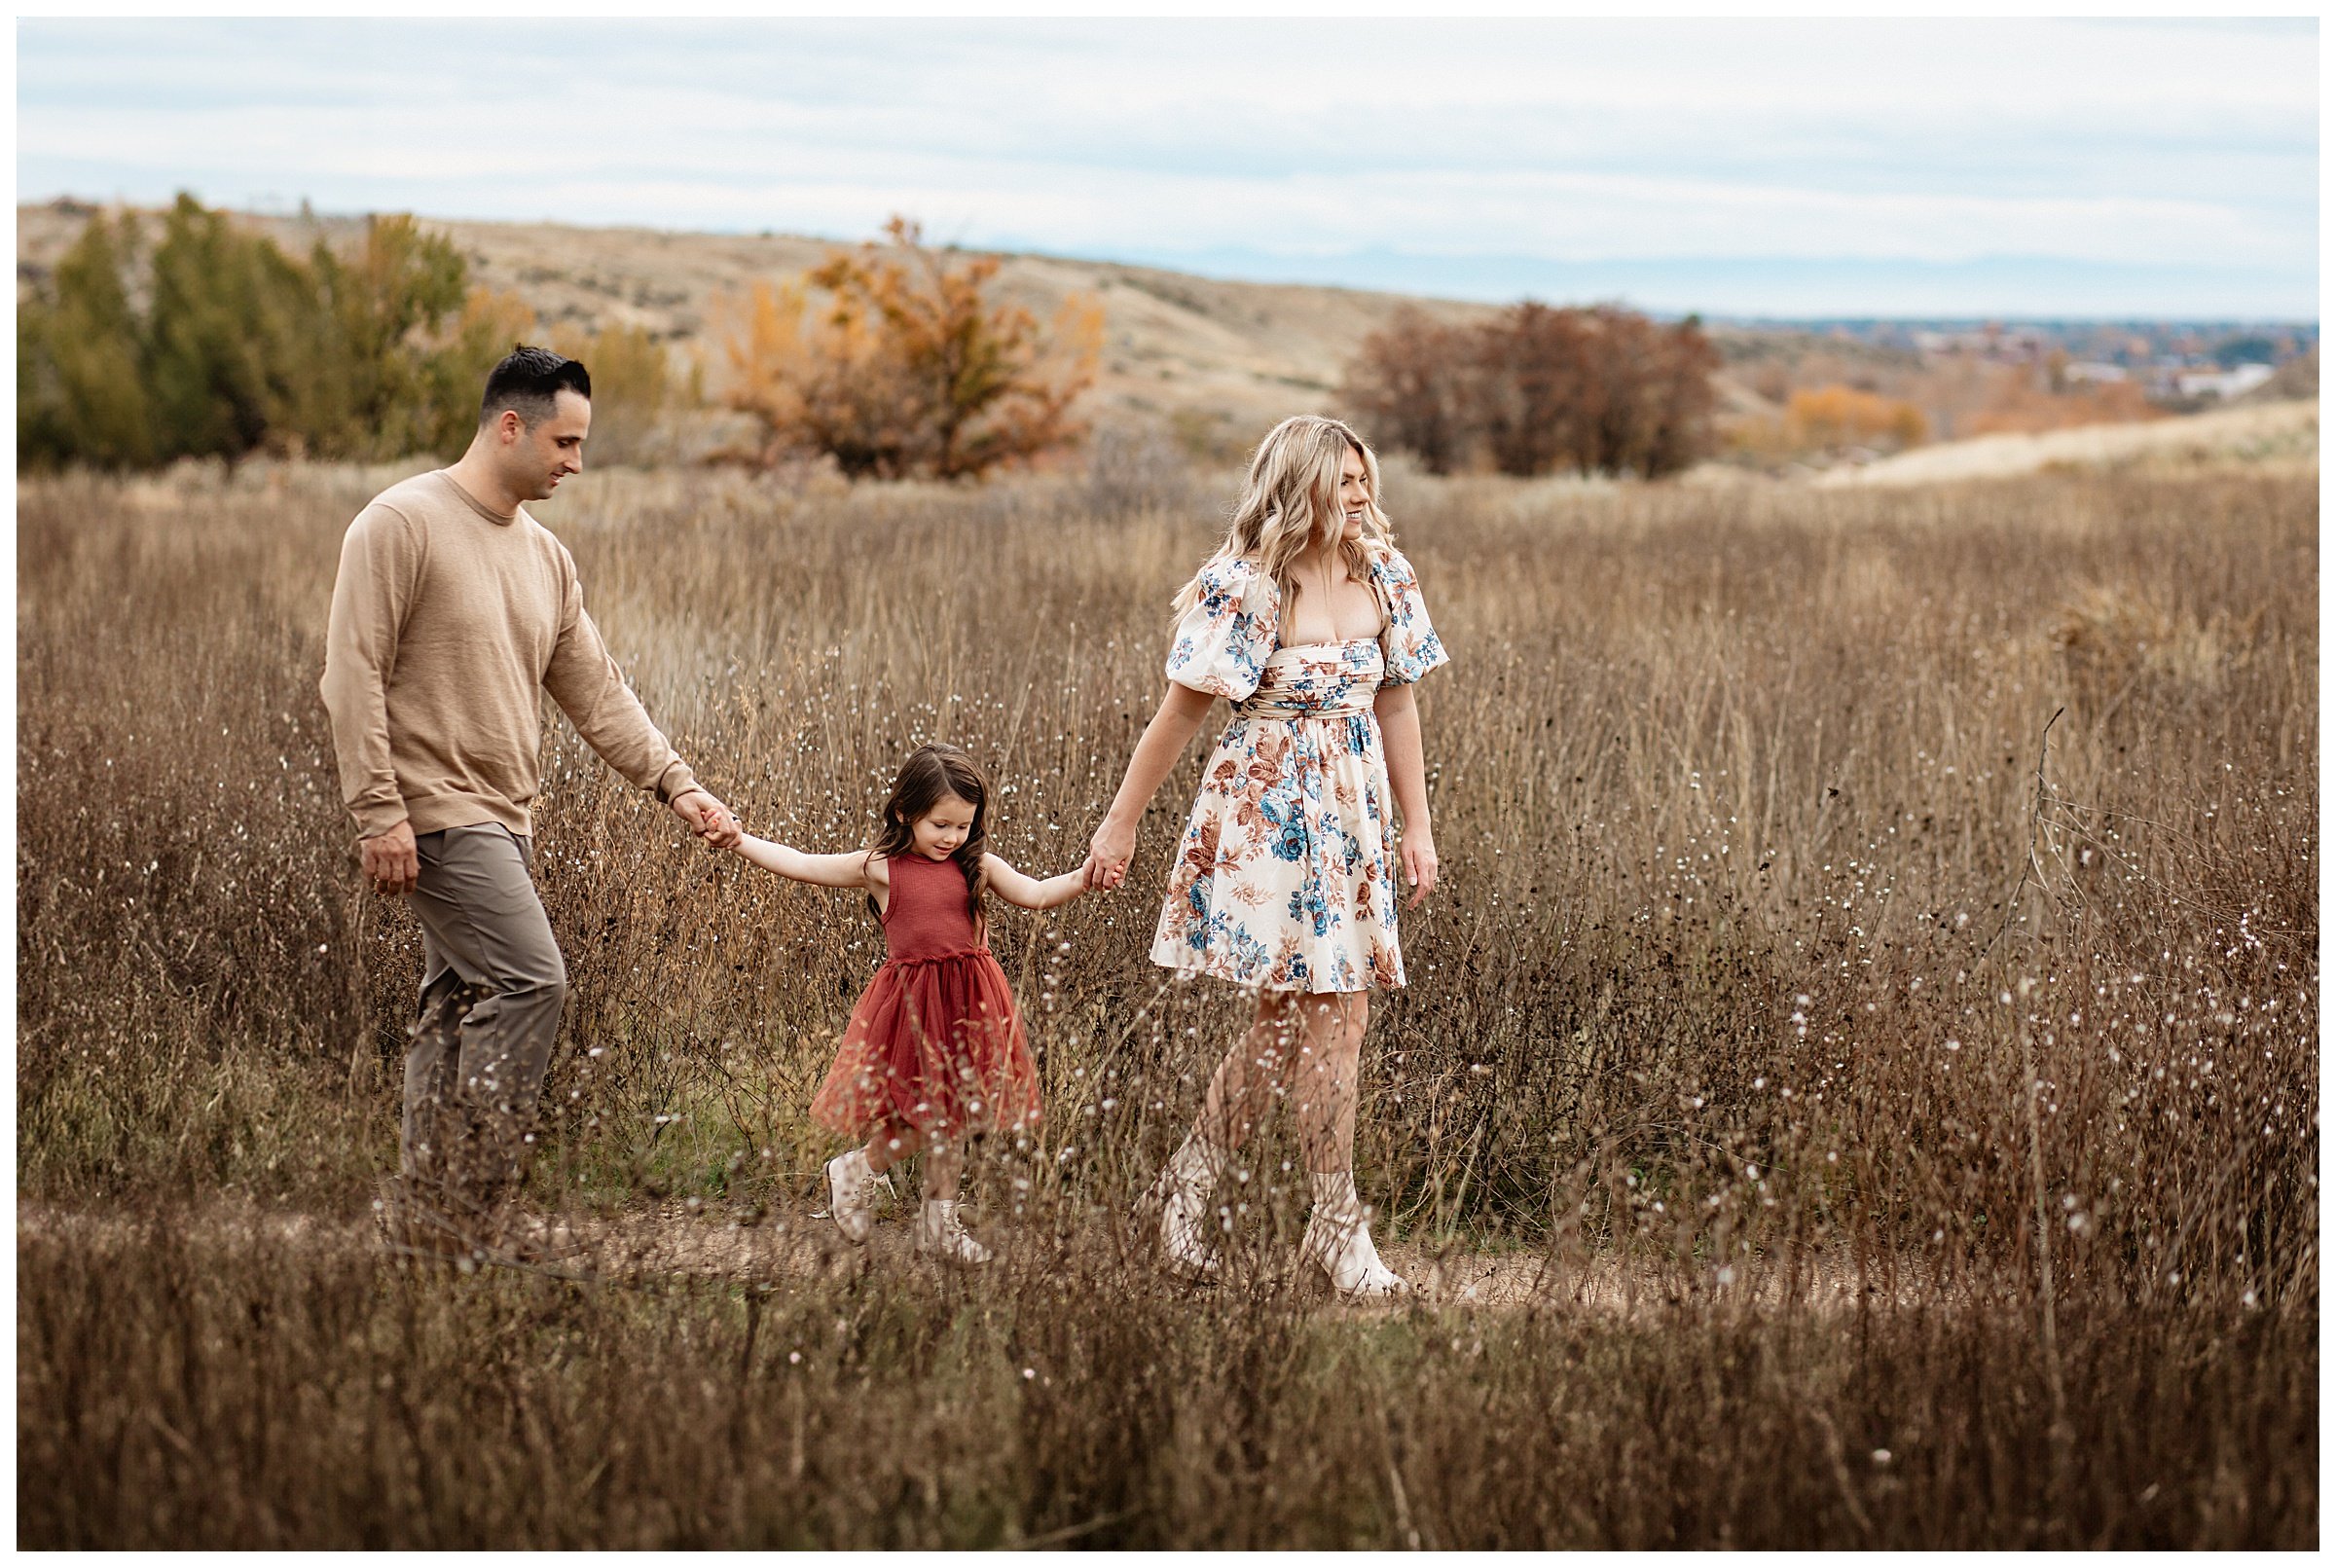 _D__8516-Edit_Boise Family Photography.jpg